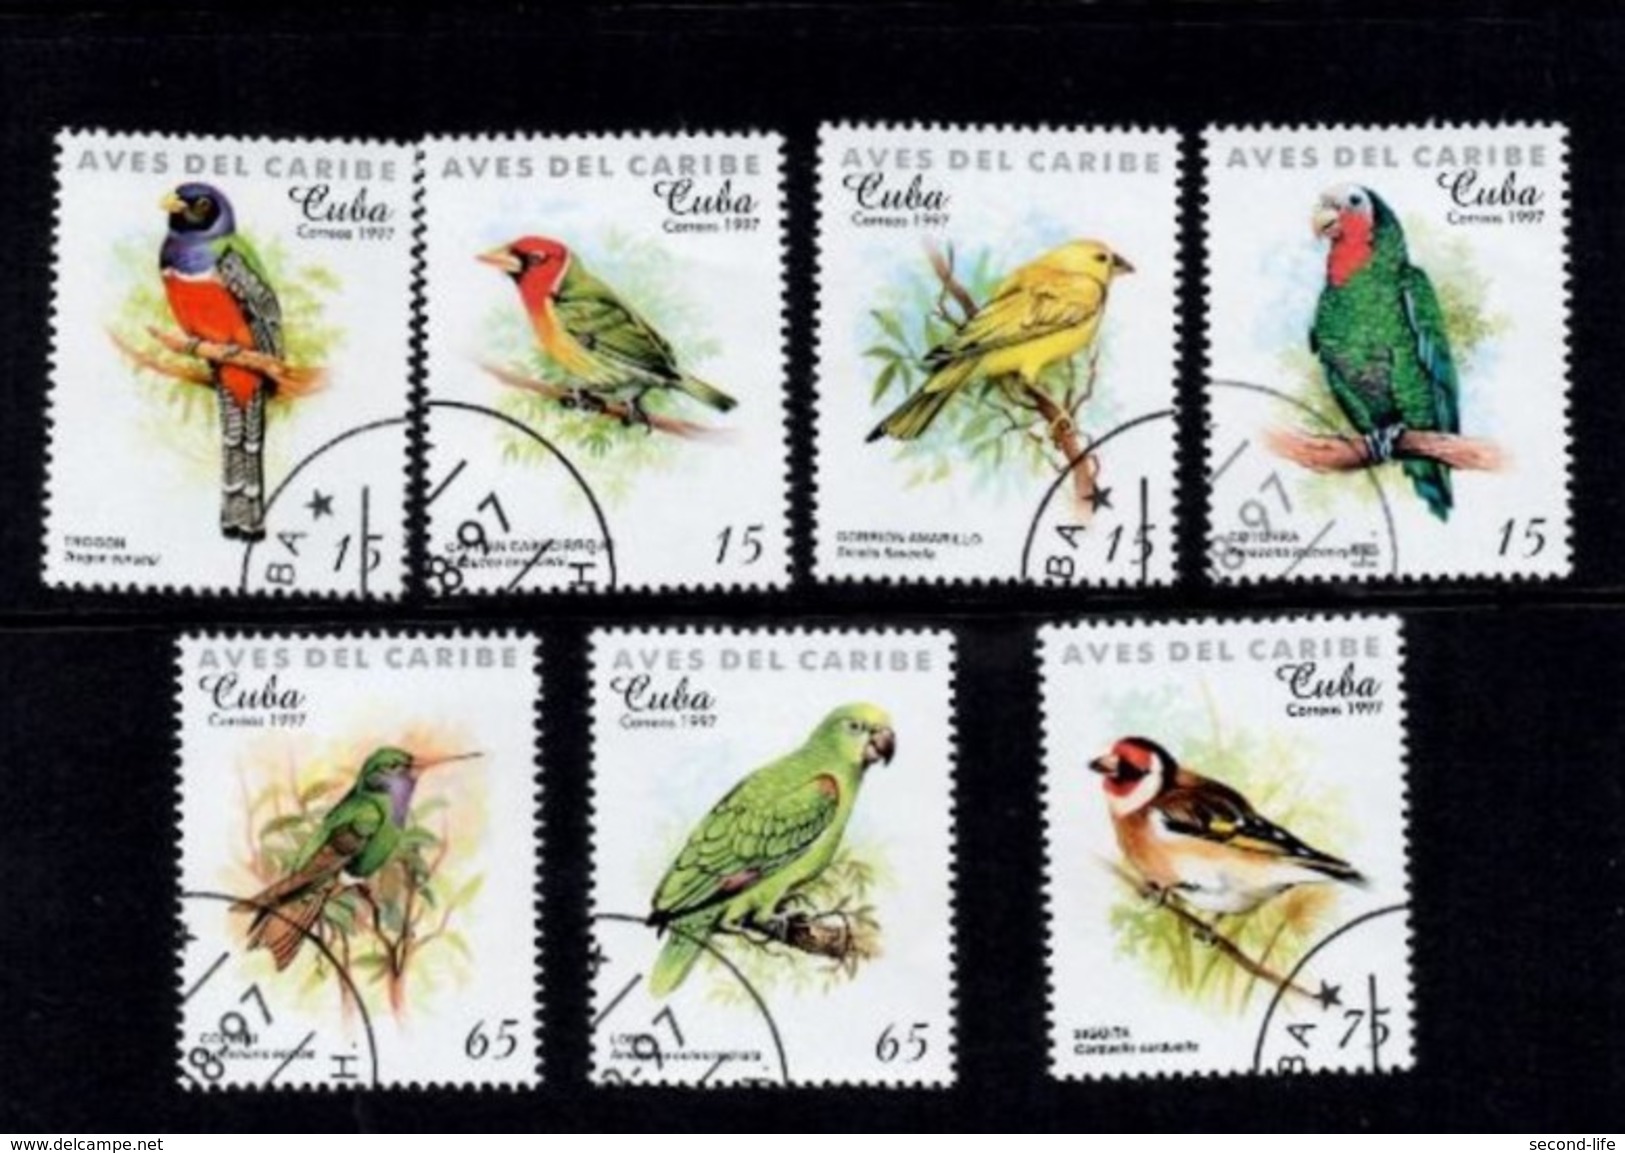 Birds Aves Del Caribe. Cuba 1977 - Voorfilatelie